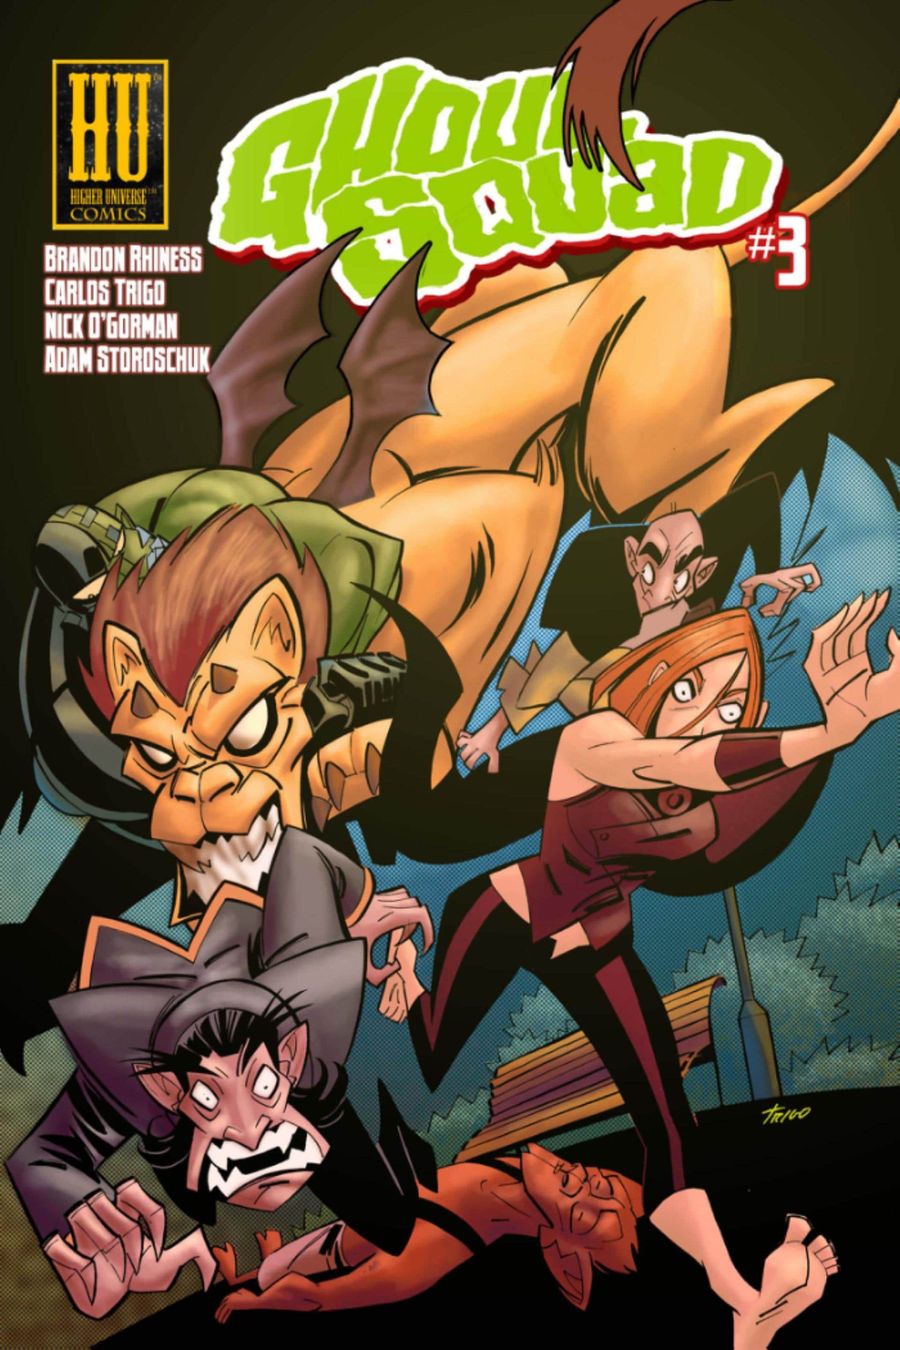 Higher Universe Comics | Ghoul Squad #3 page 1 | Spinwhiz Comics